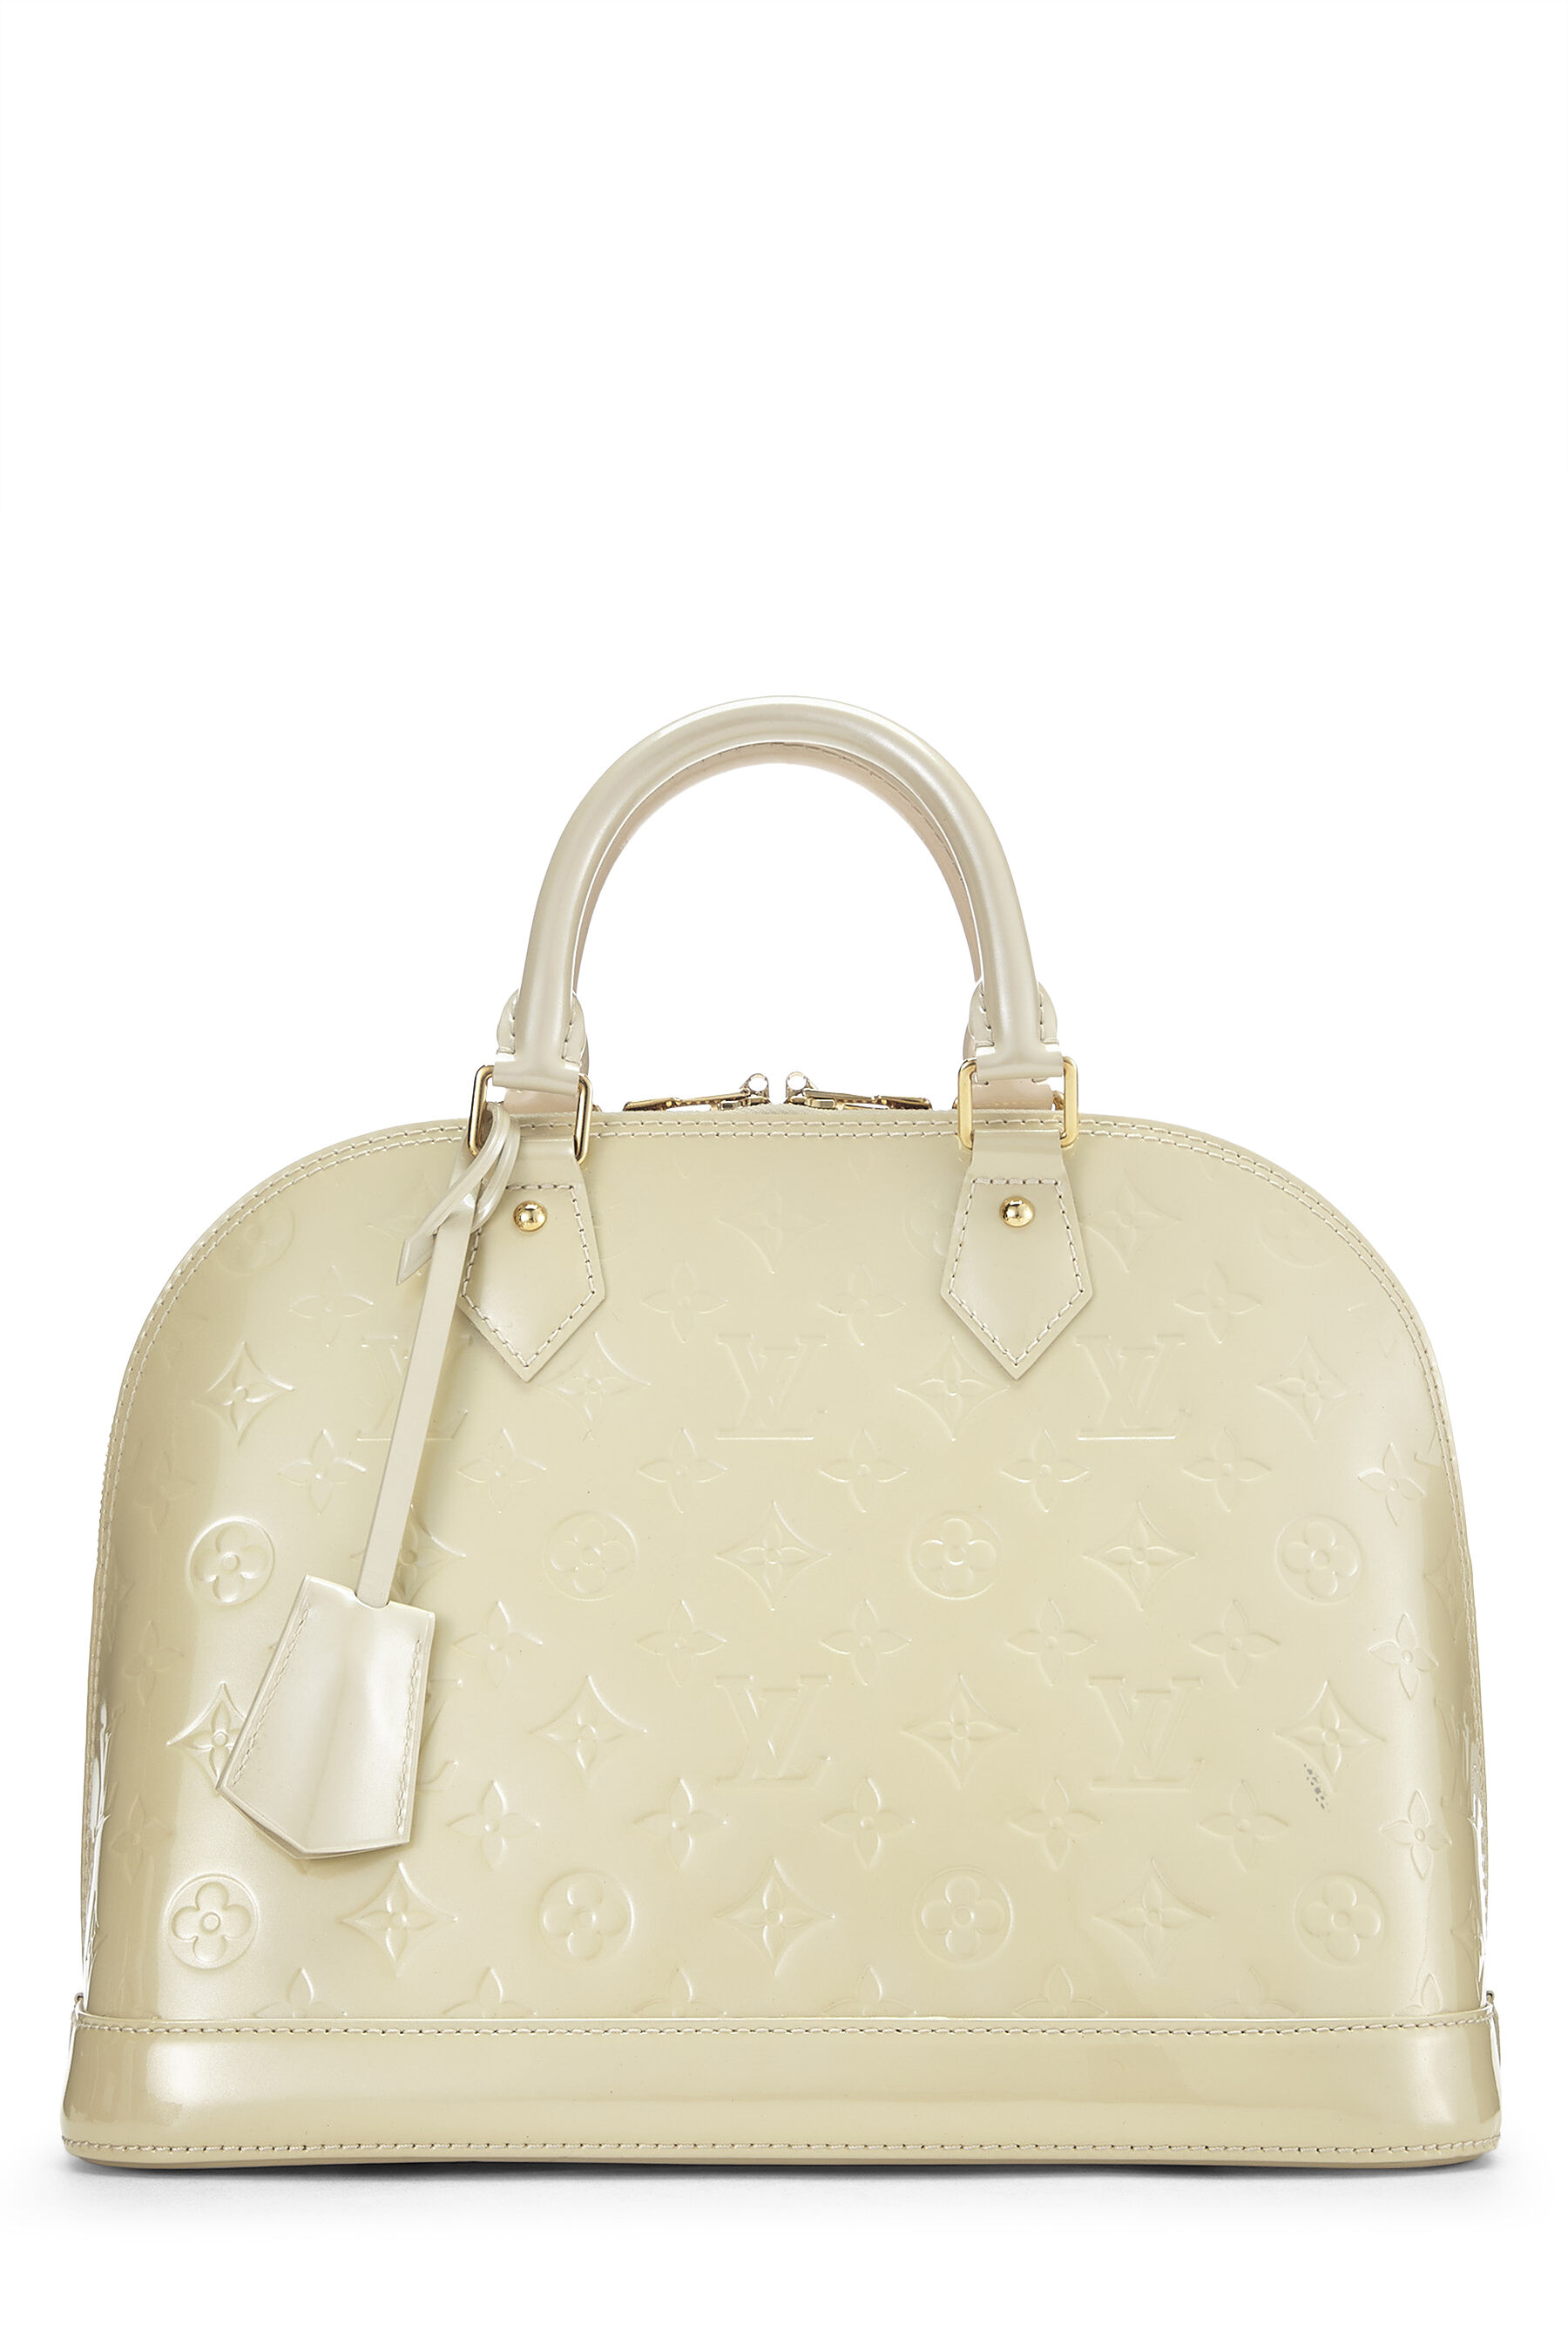 Louis Vuitton Bellflower Handbag Monogram Vernis PM MV Blanc Corail M91703